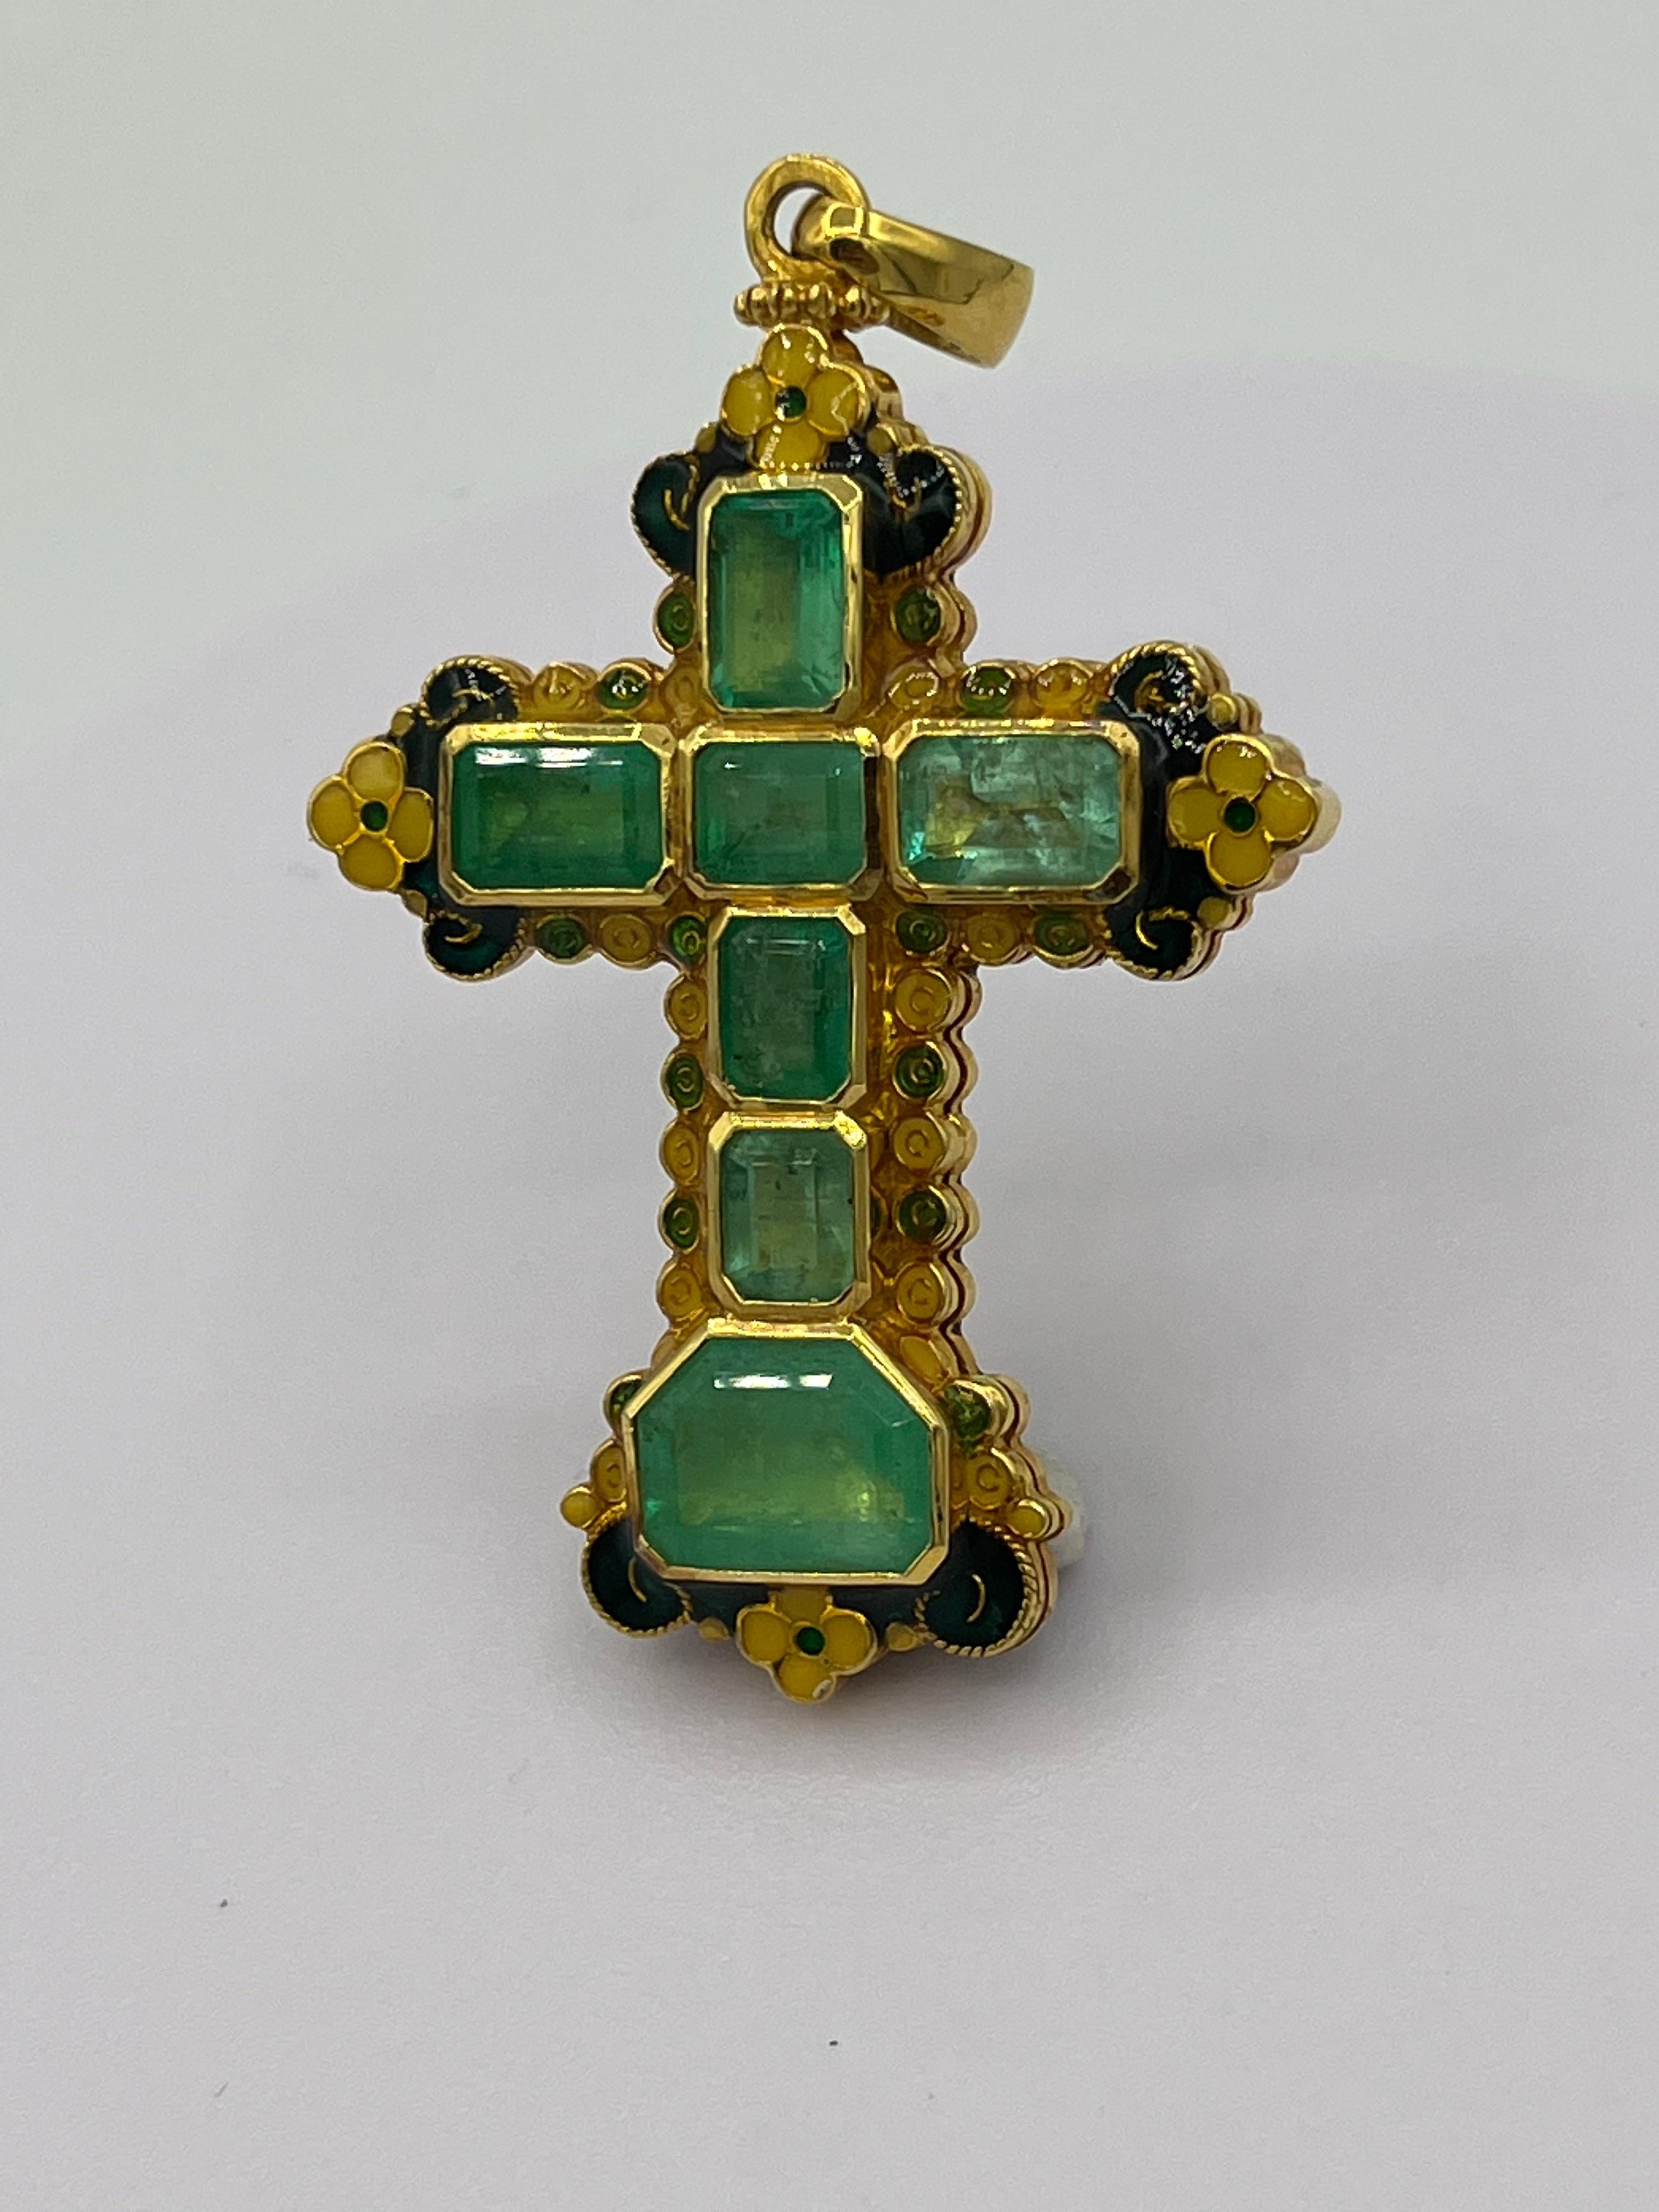 18 k yellow gold
13,60 ct emerald 
enamel
35,6 gram
65 mm x 40 mm